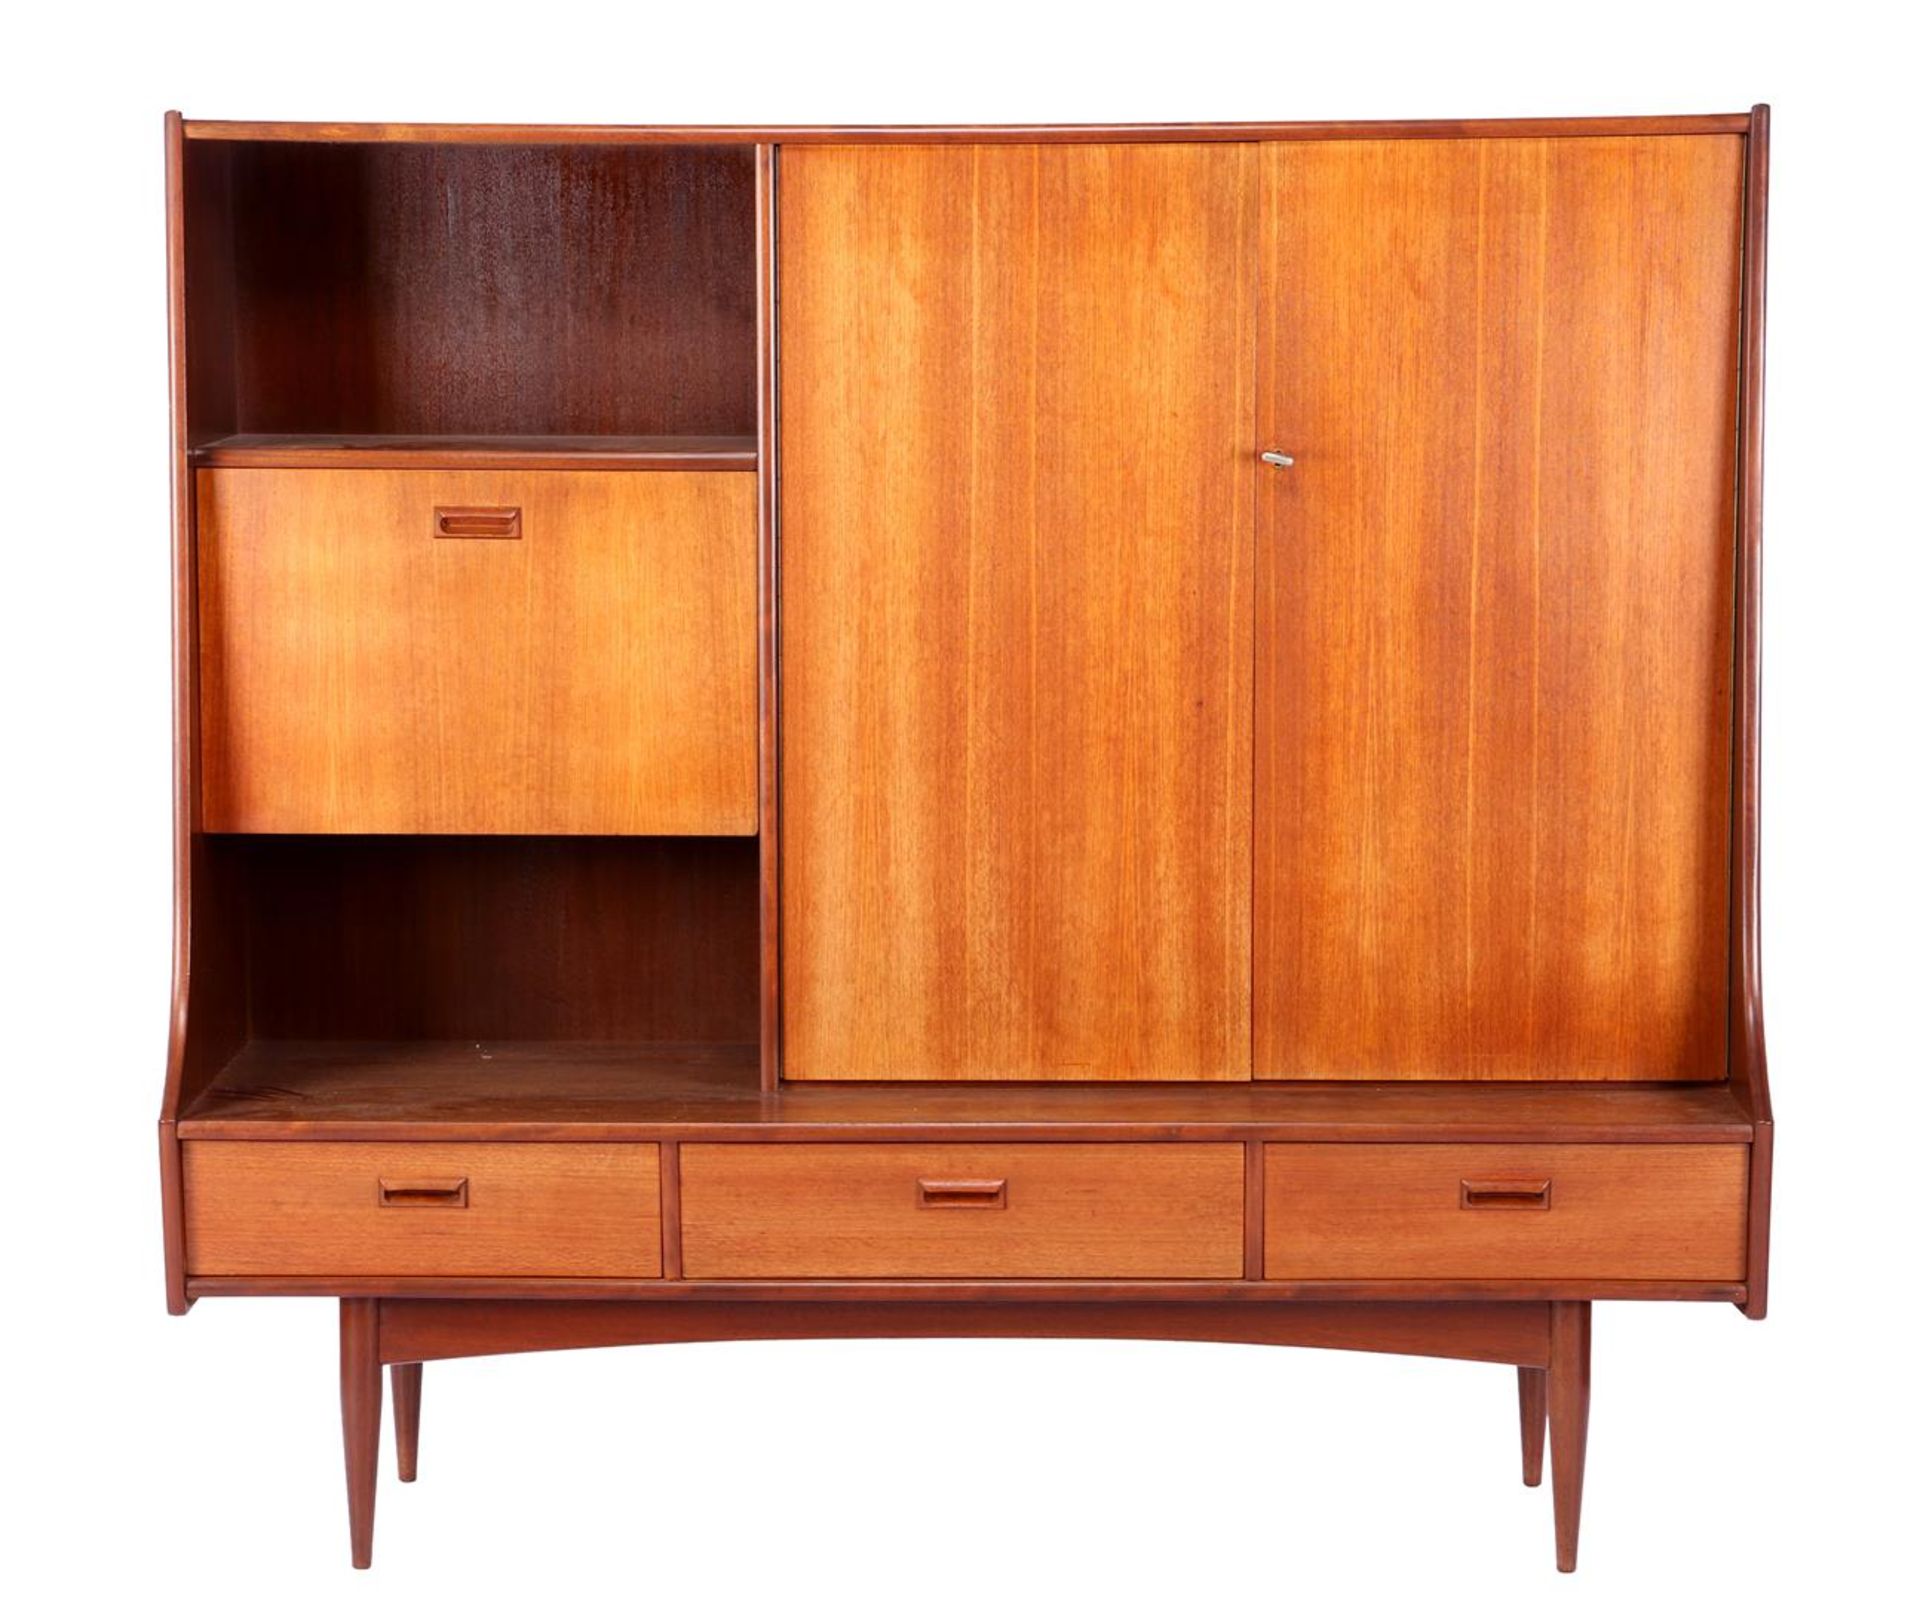 Design Berner Huwil, teak veneer salon cabinet with 2 doors, & nbsp; flap, 3 drawers and open